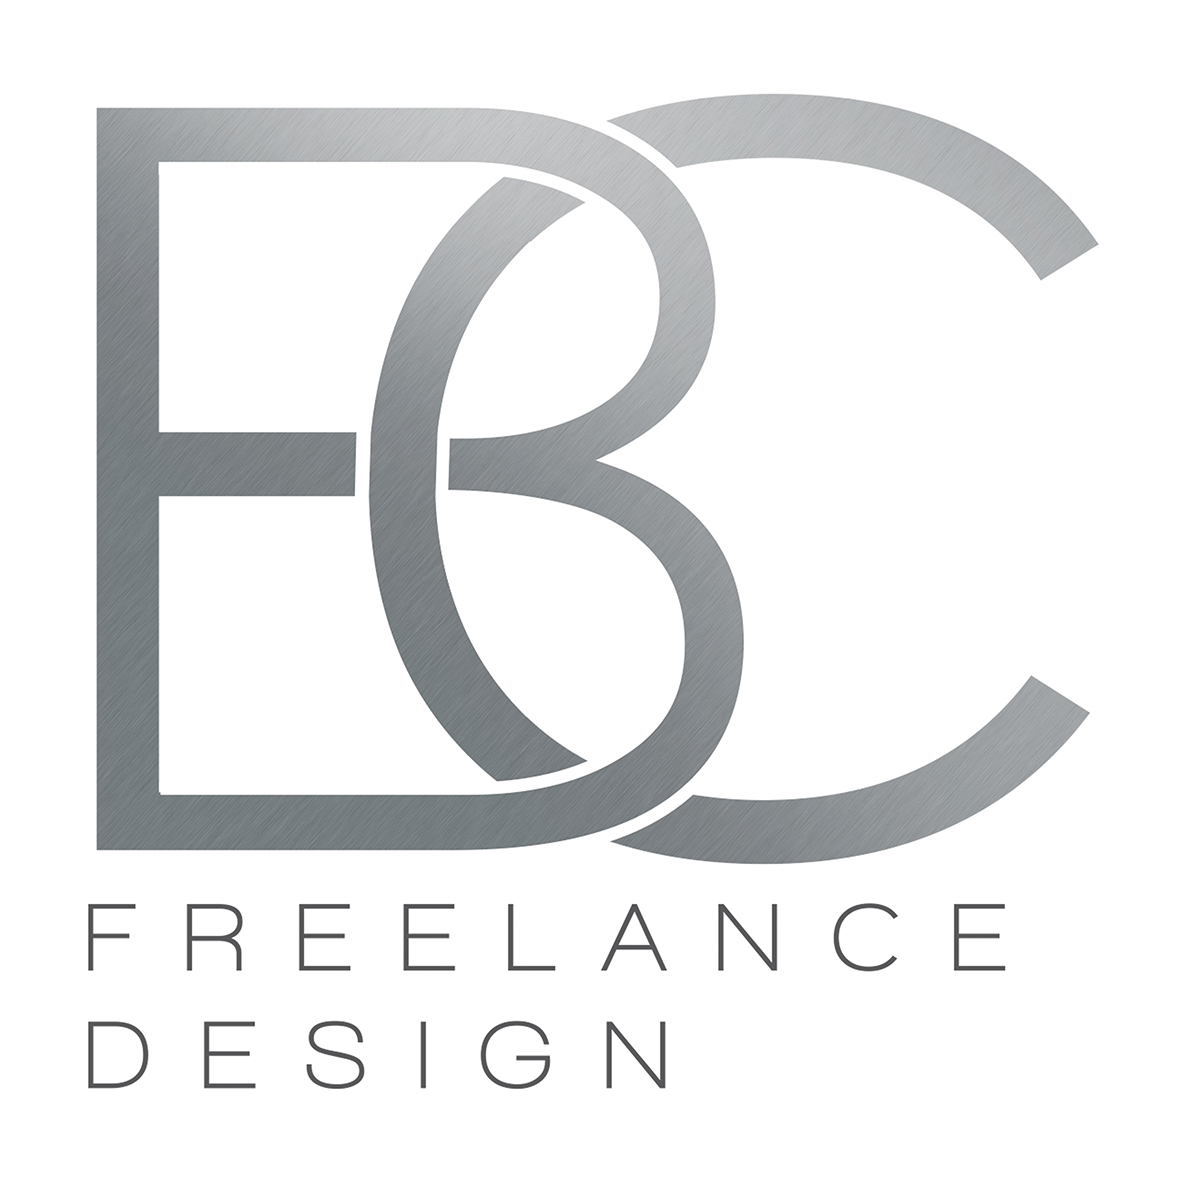 BC freelance design - Accommodation Nelson Bay